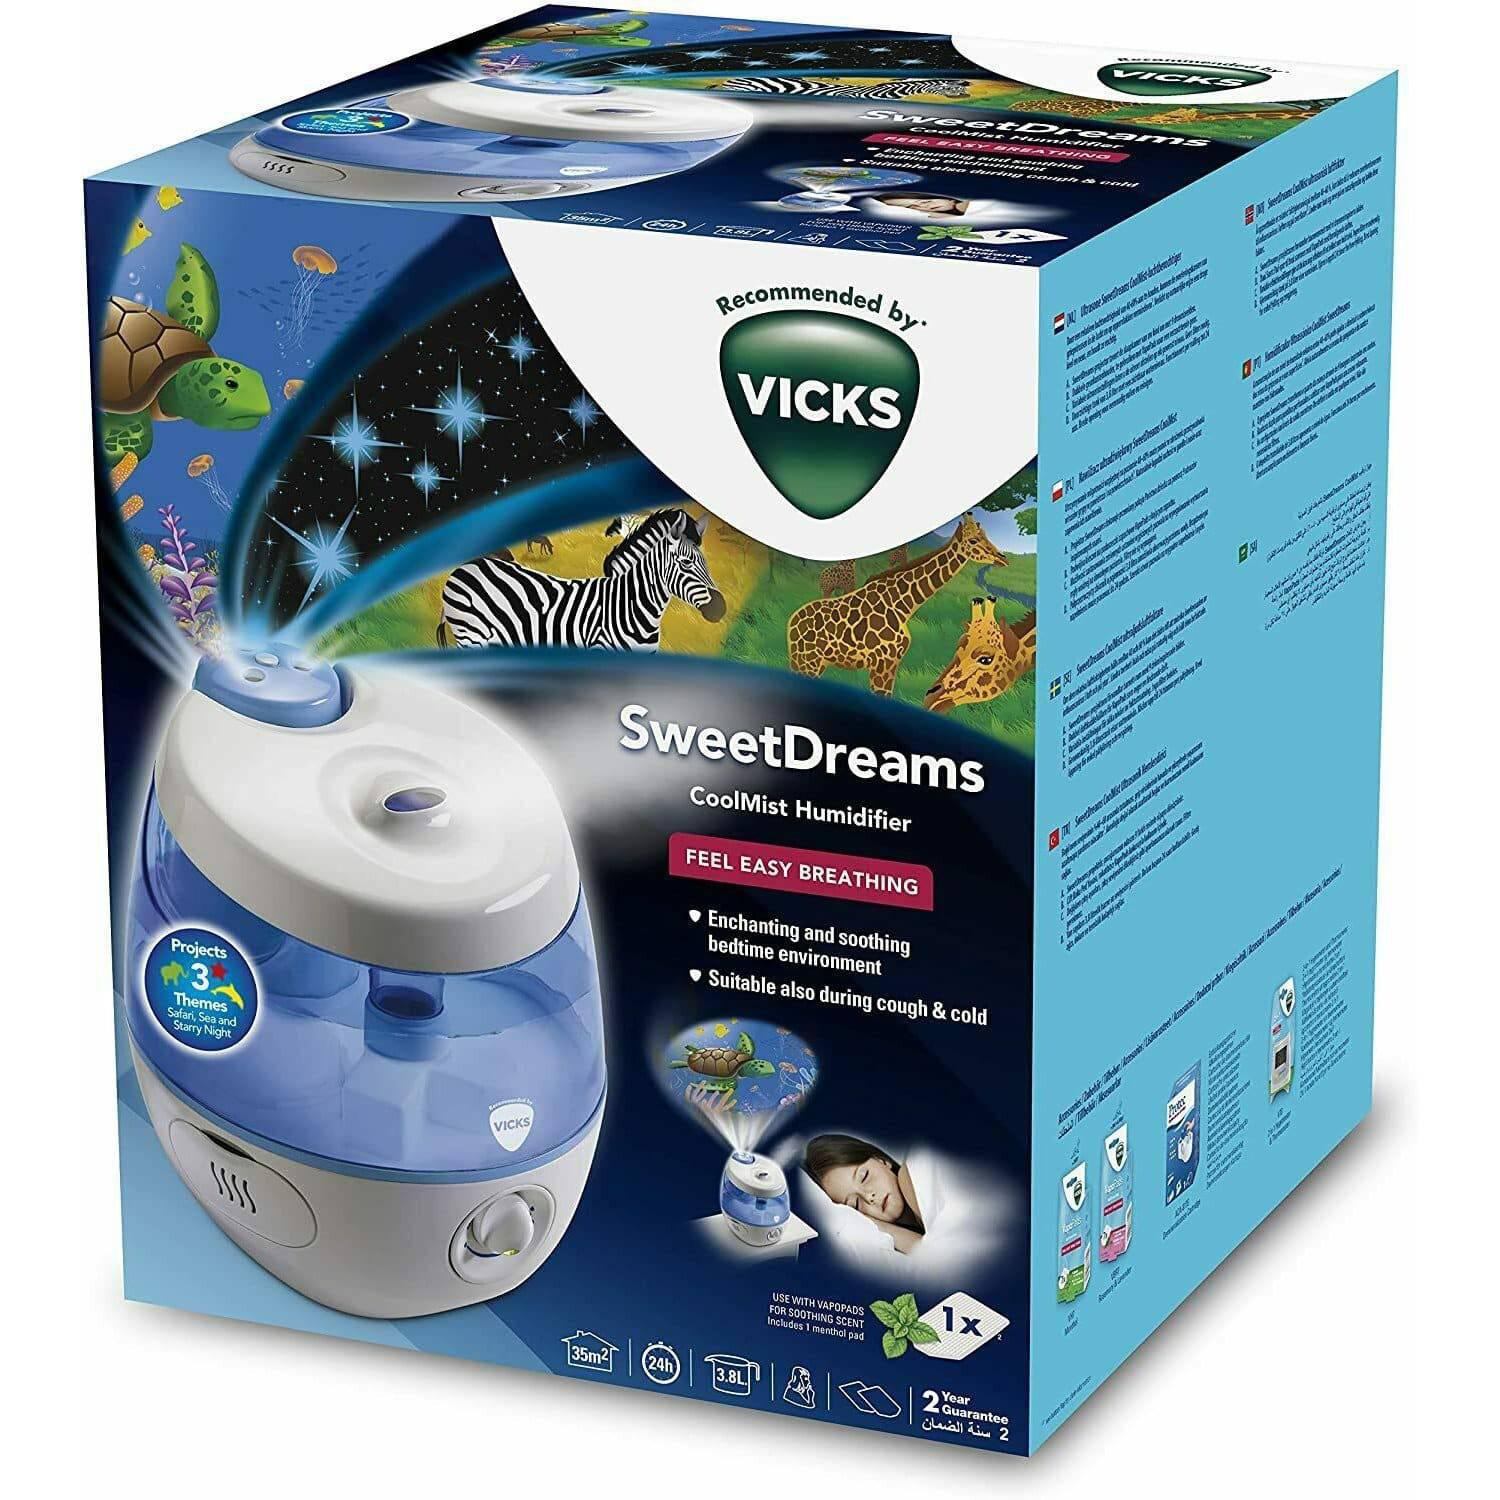 Vicks VUL575E1V1 Sweet Dreams Cool Mist Humidifier - New Version, 3.8L